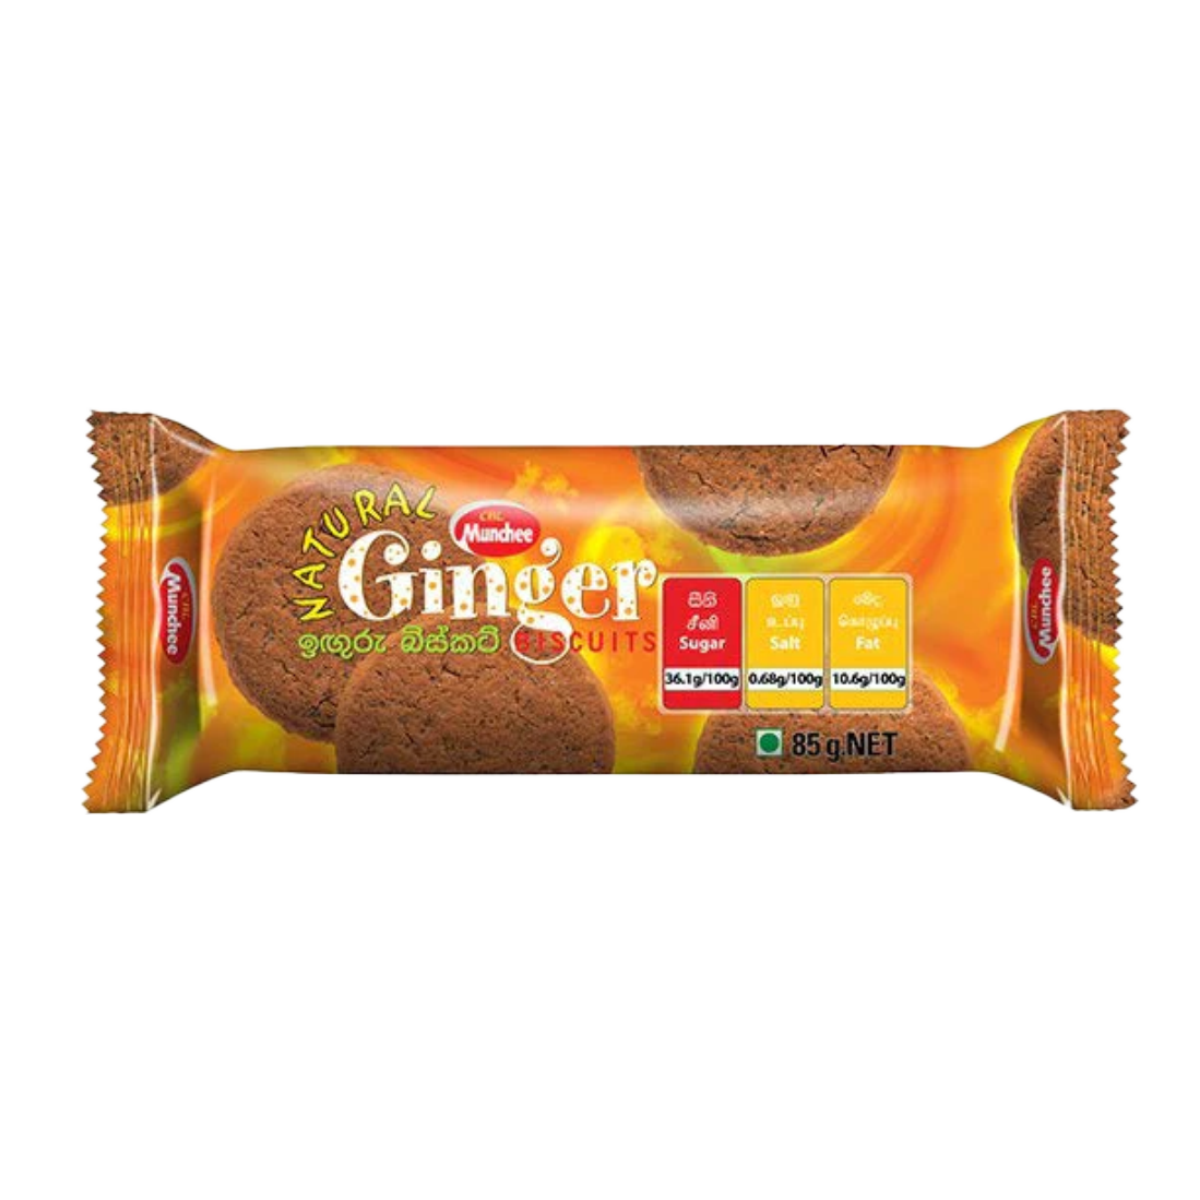 CBL Munchee Nat Ginger Biscuit 80g [Assorted]